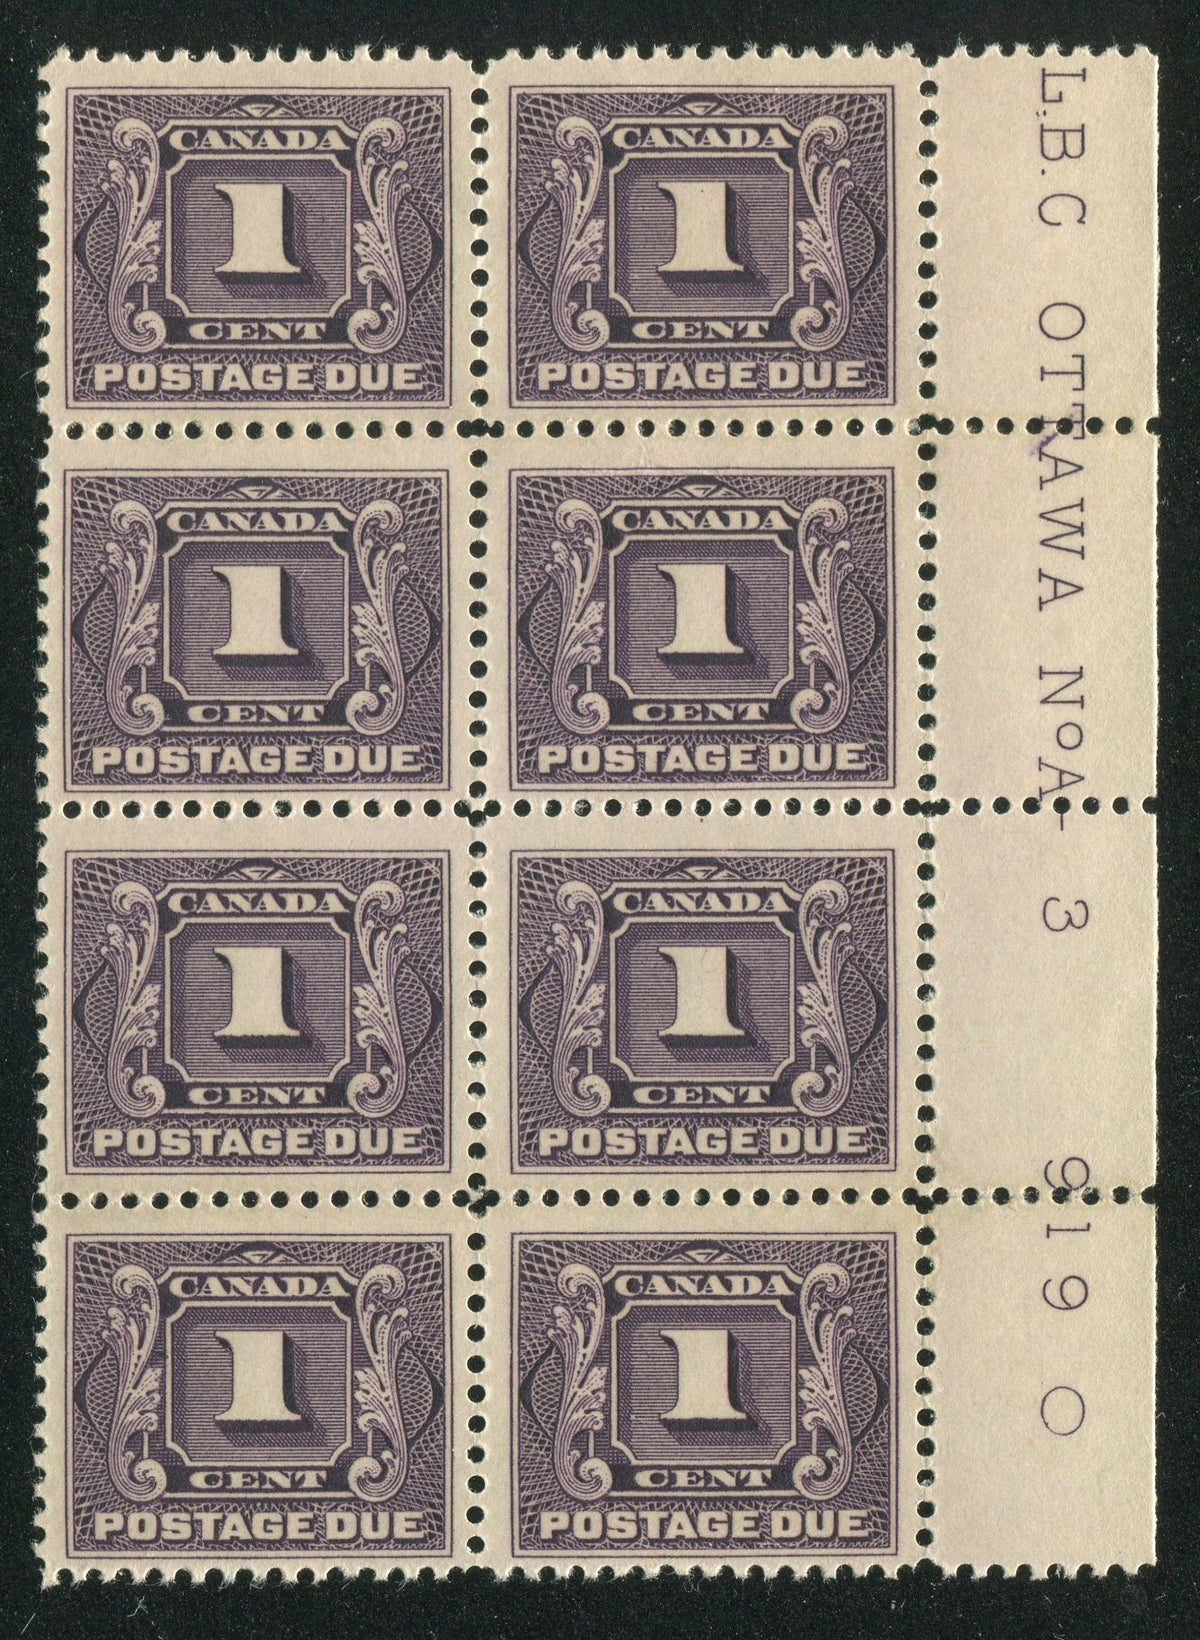 0117CA1710 - Canada J1 - Mint Plate Block of 8